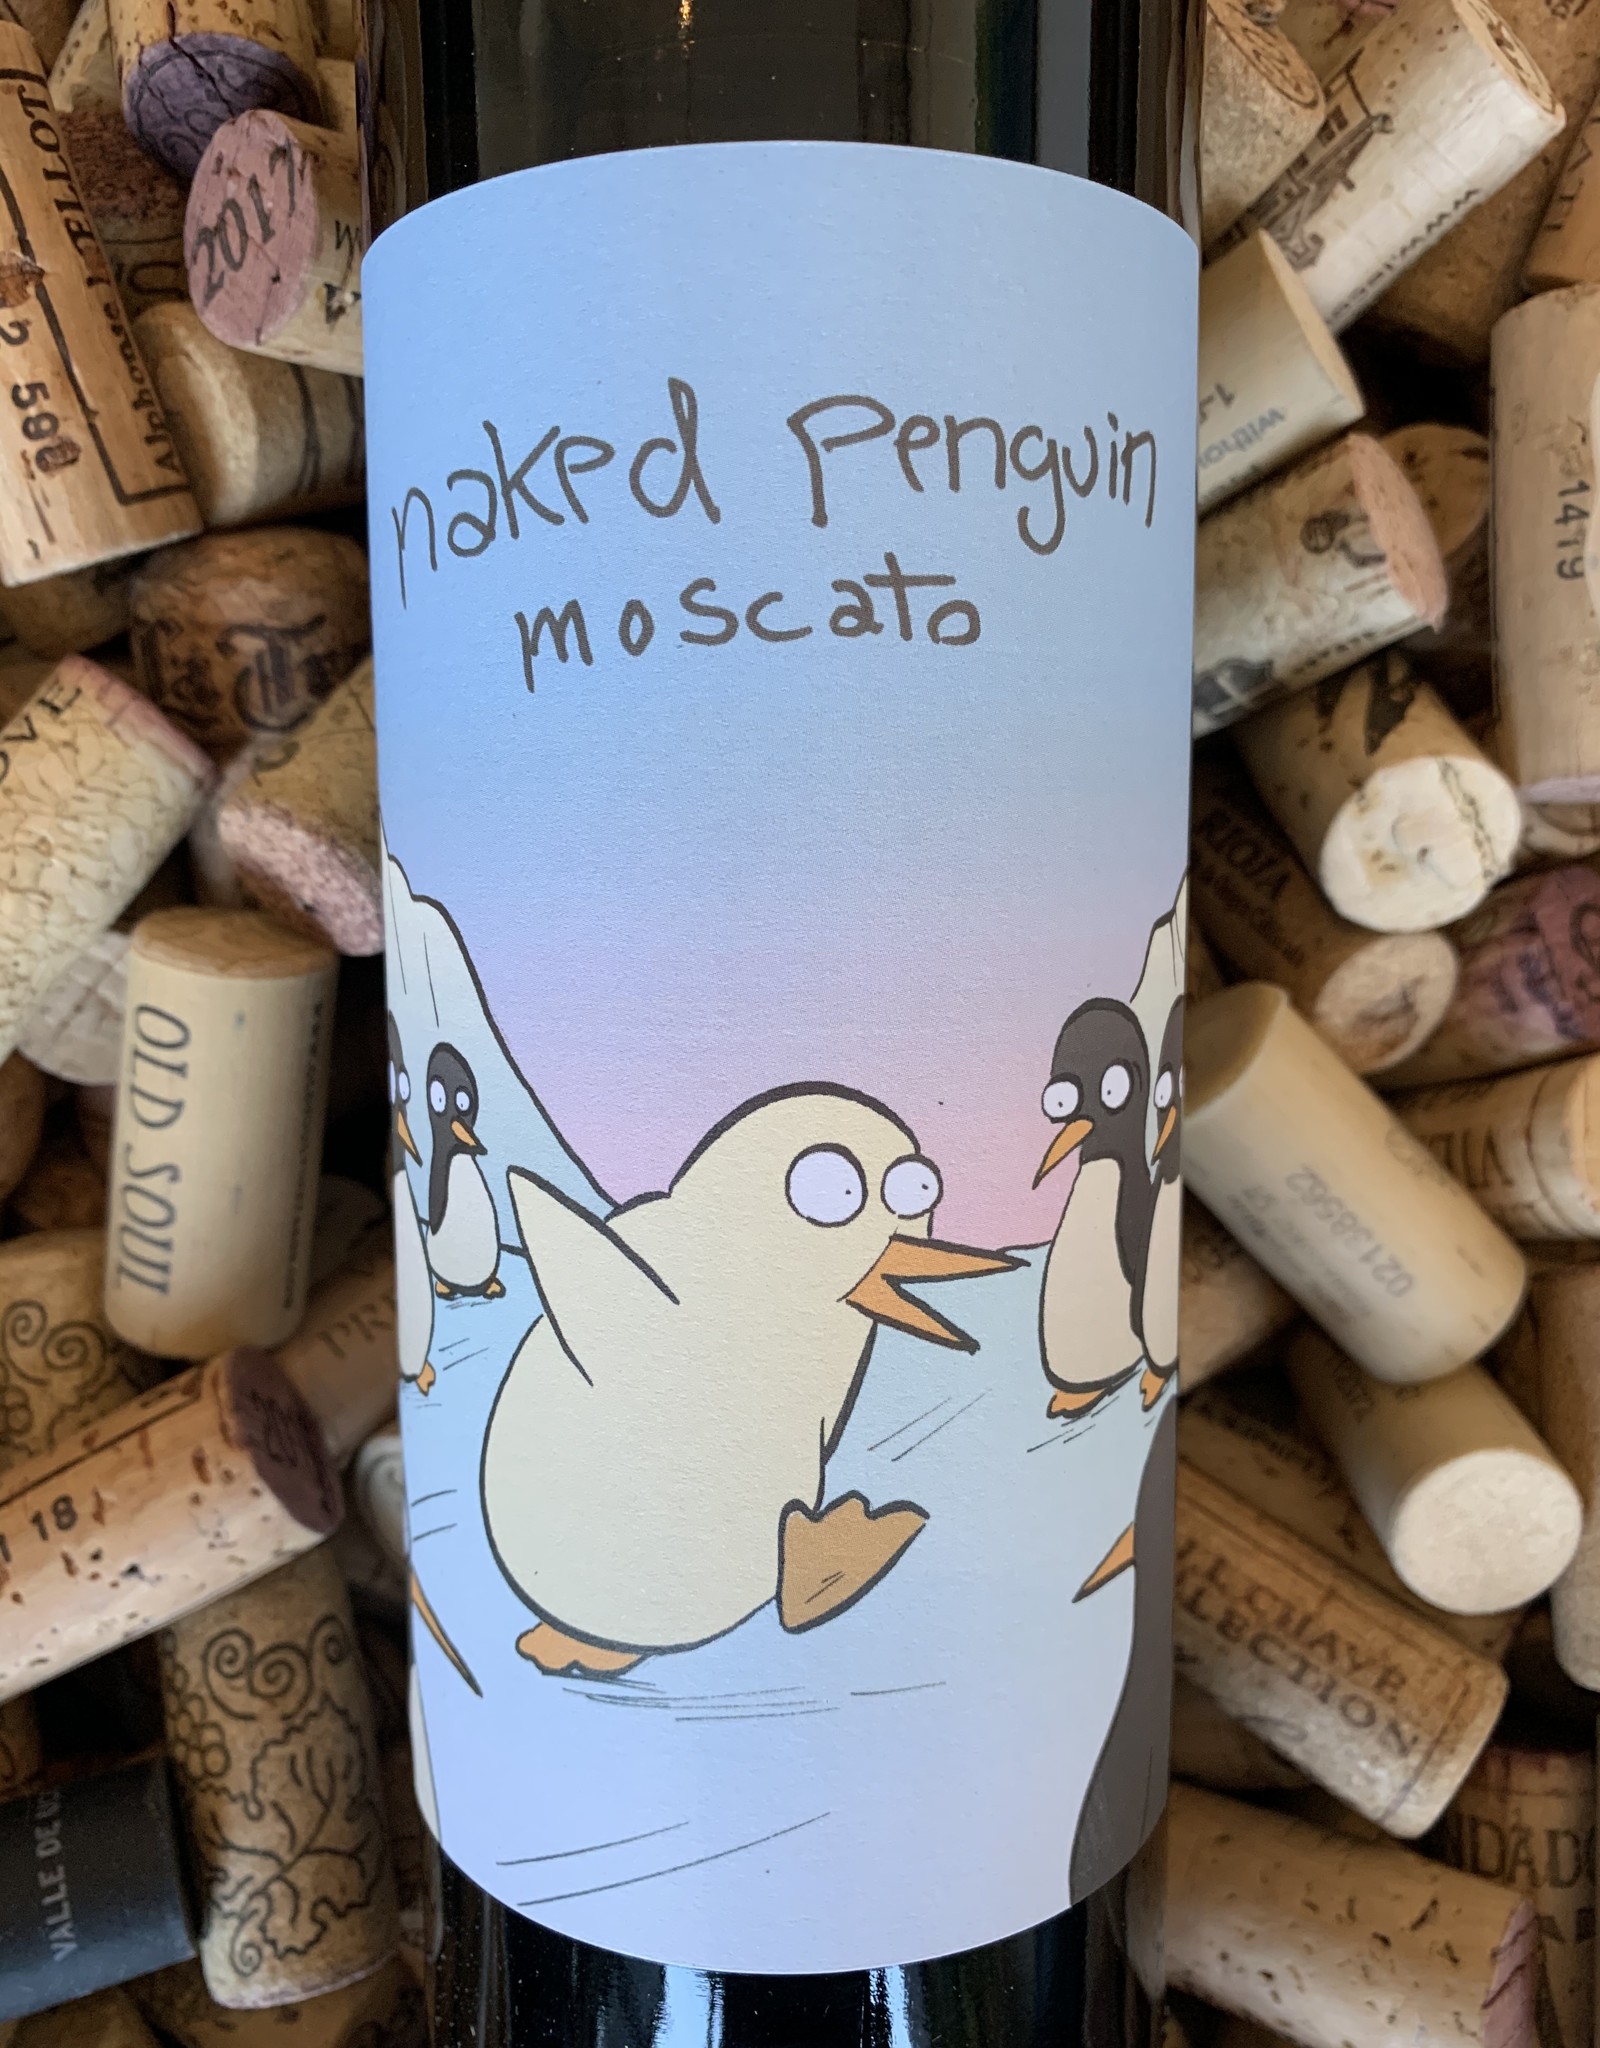 Soroca Naked Penguin Moscato Mol